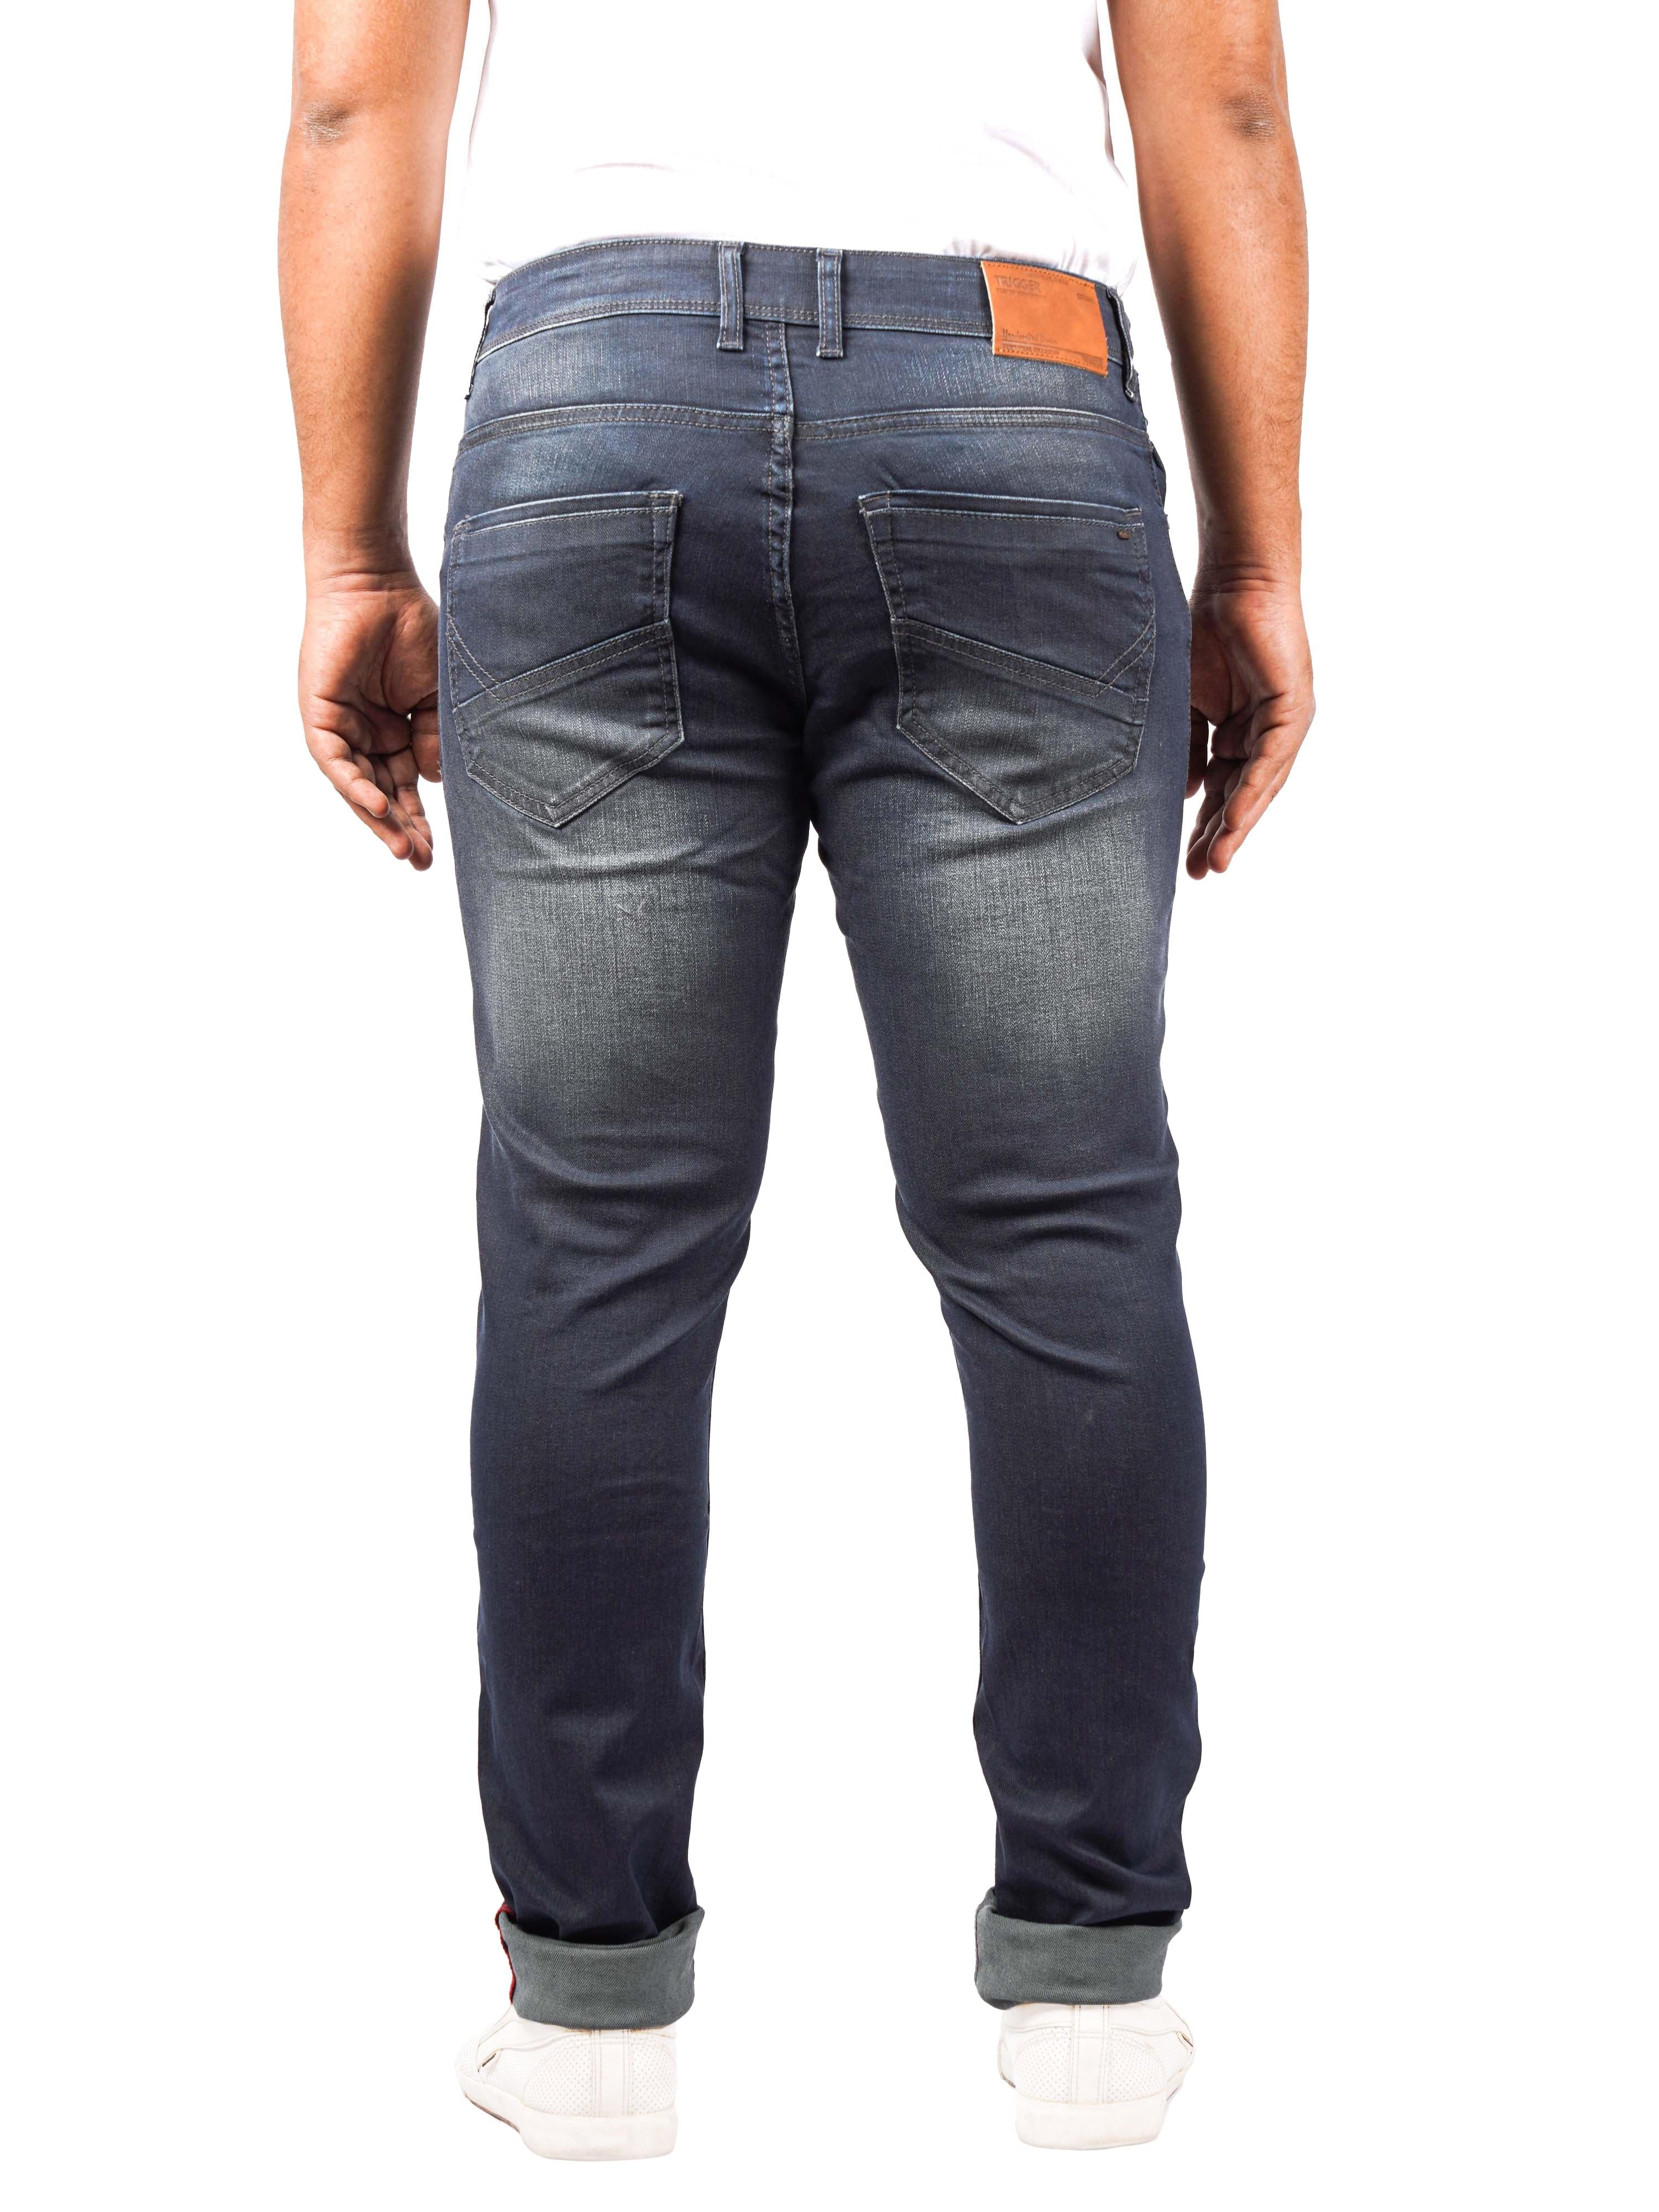 Men Slim-Fit Grey Jeans - Triggerjeans